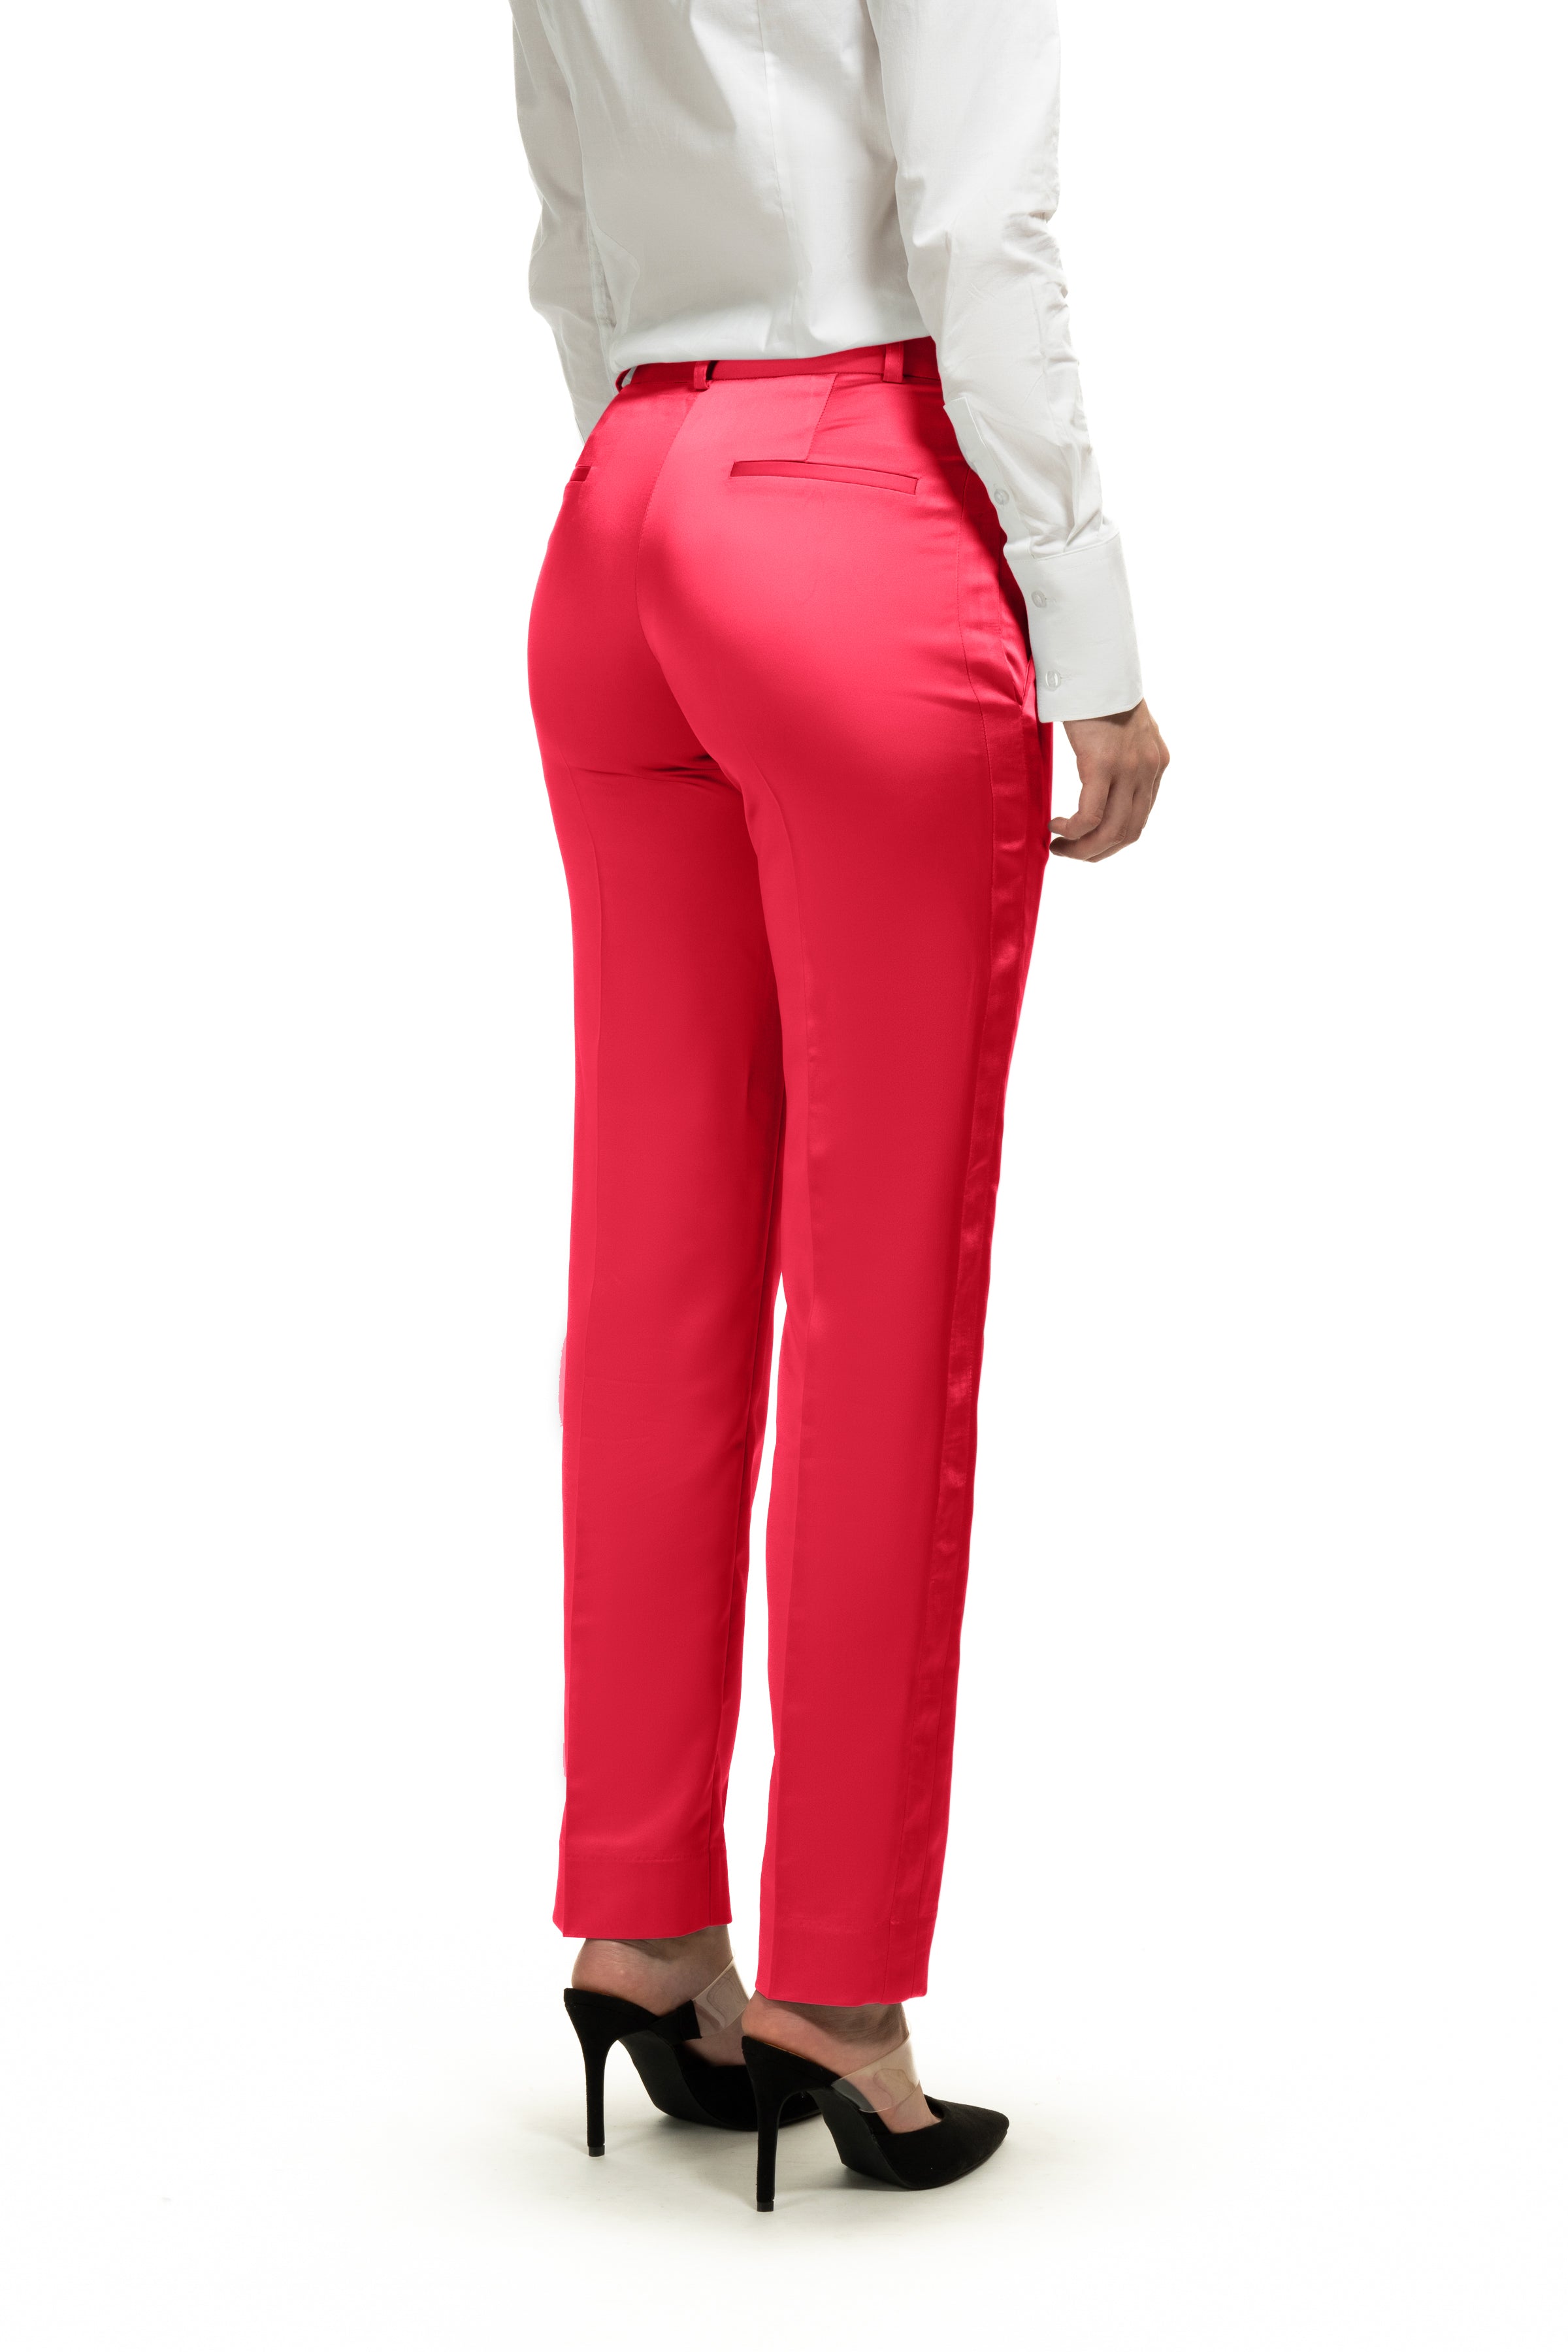 Fuchsia Satin Slim Fit Tuxedo Pants w/ Satin Back Pocket